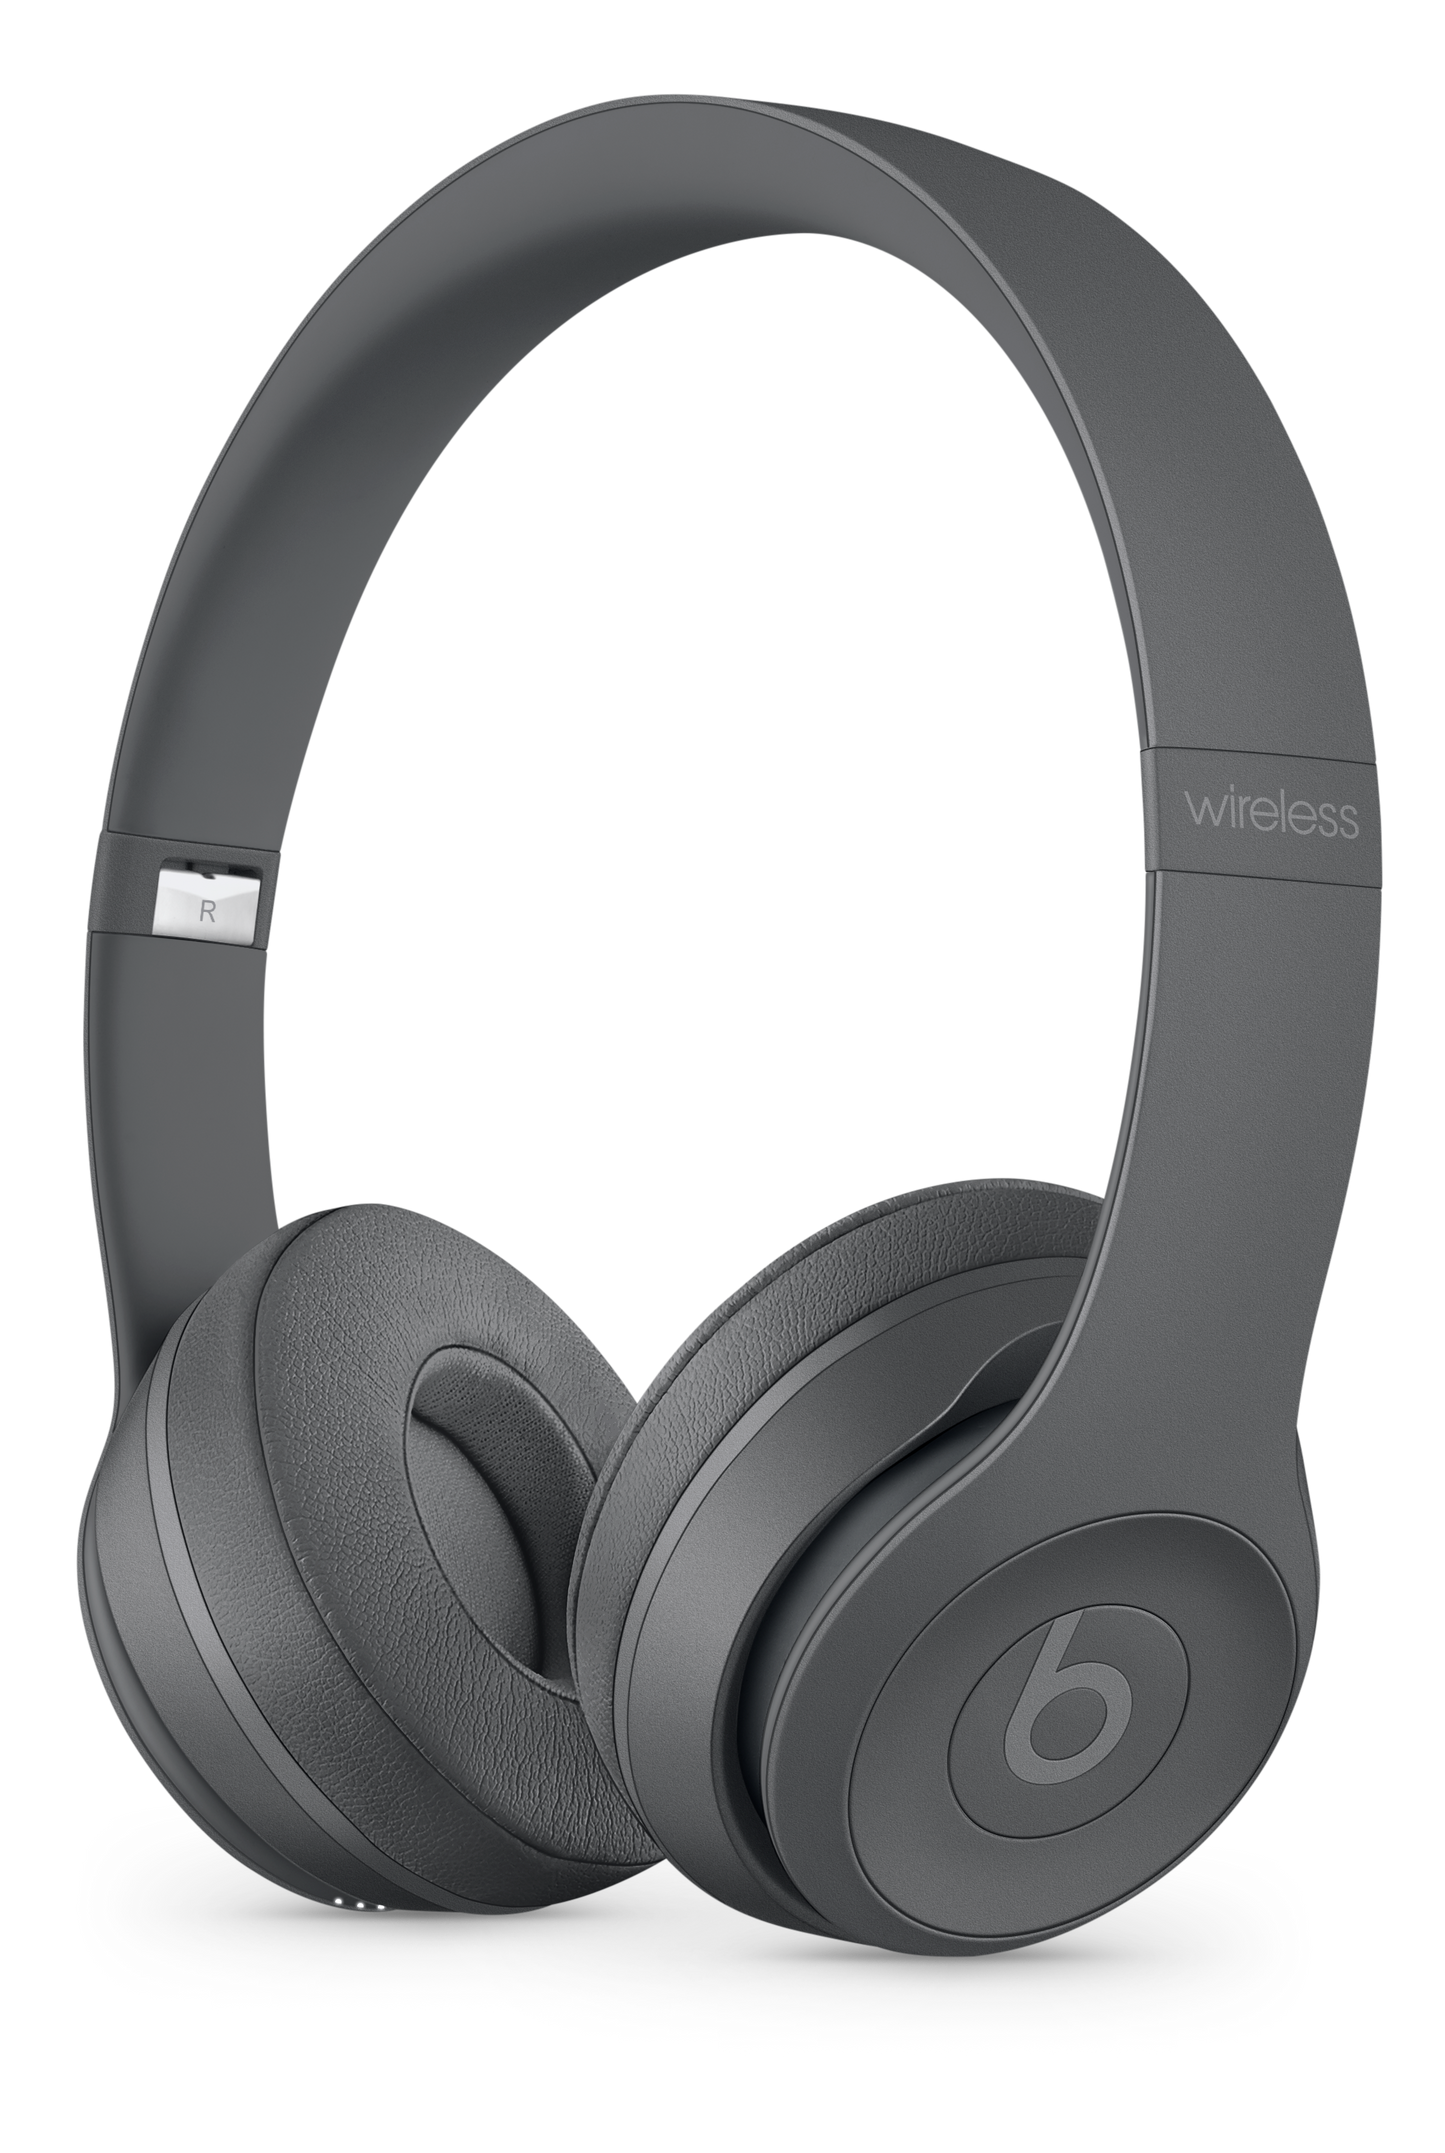 Beats Solo3 Wireless On-Ear Headphones - Neighborhood Collection - Asphalt Gray